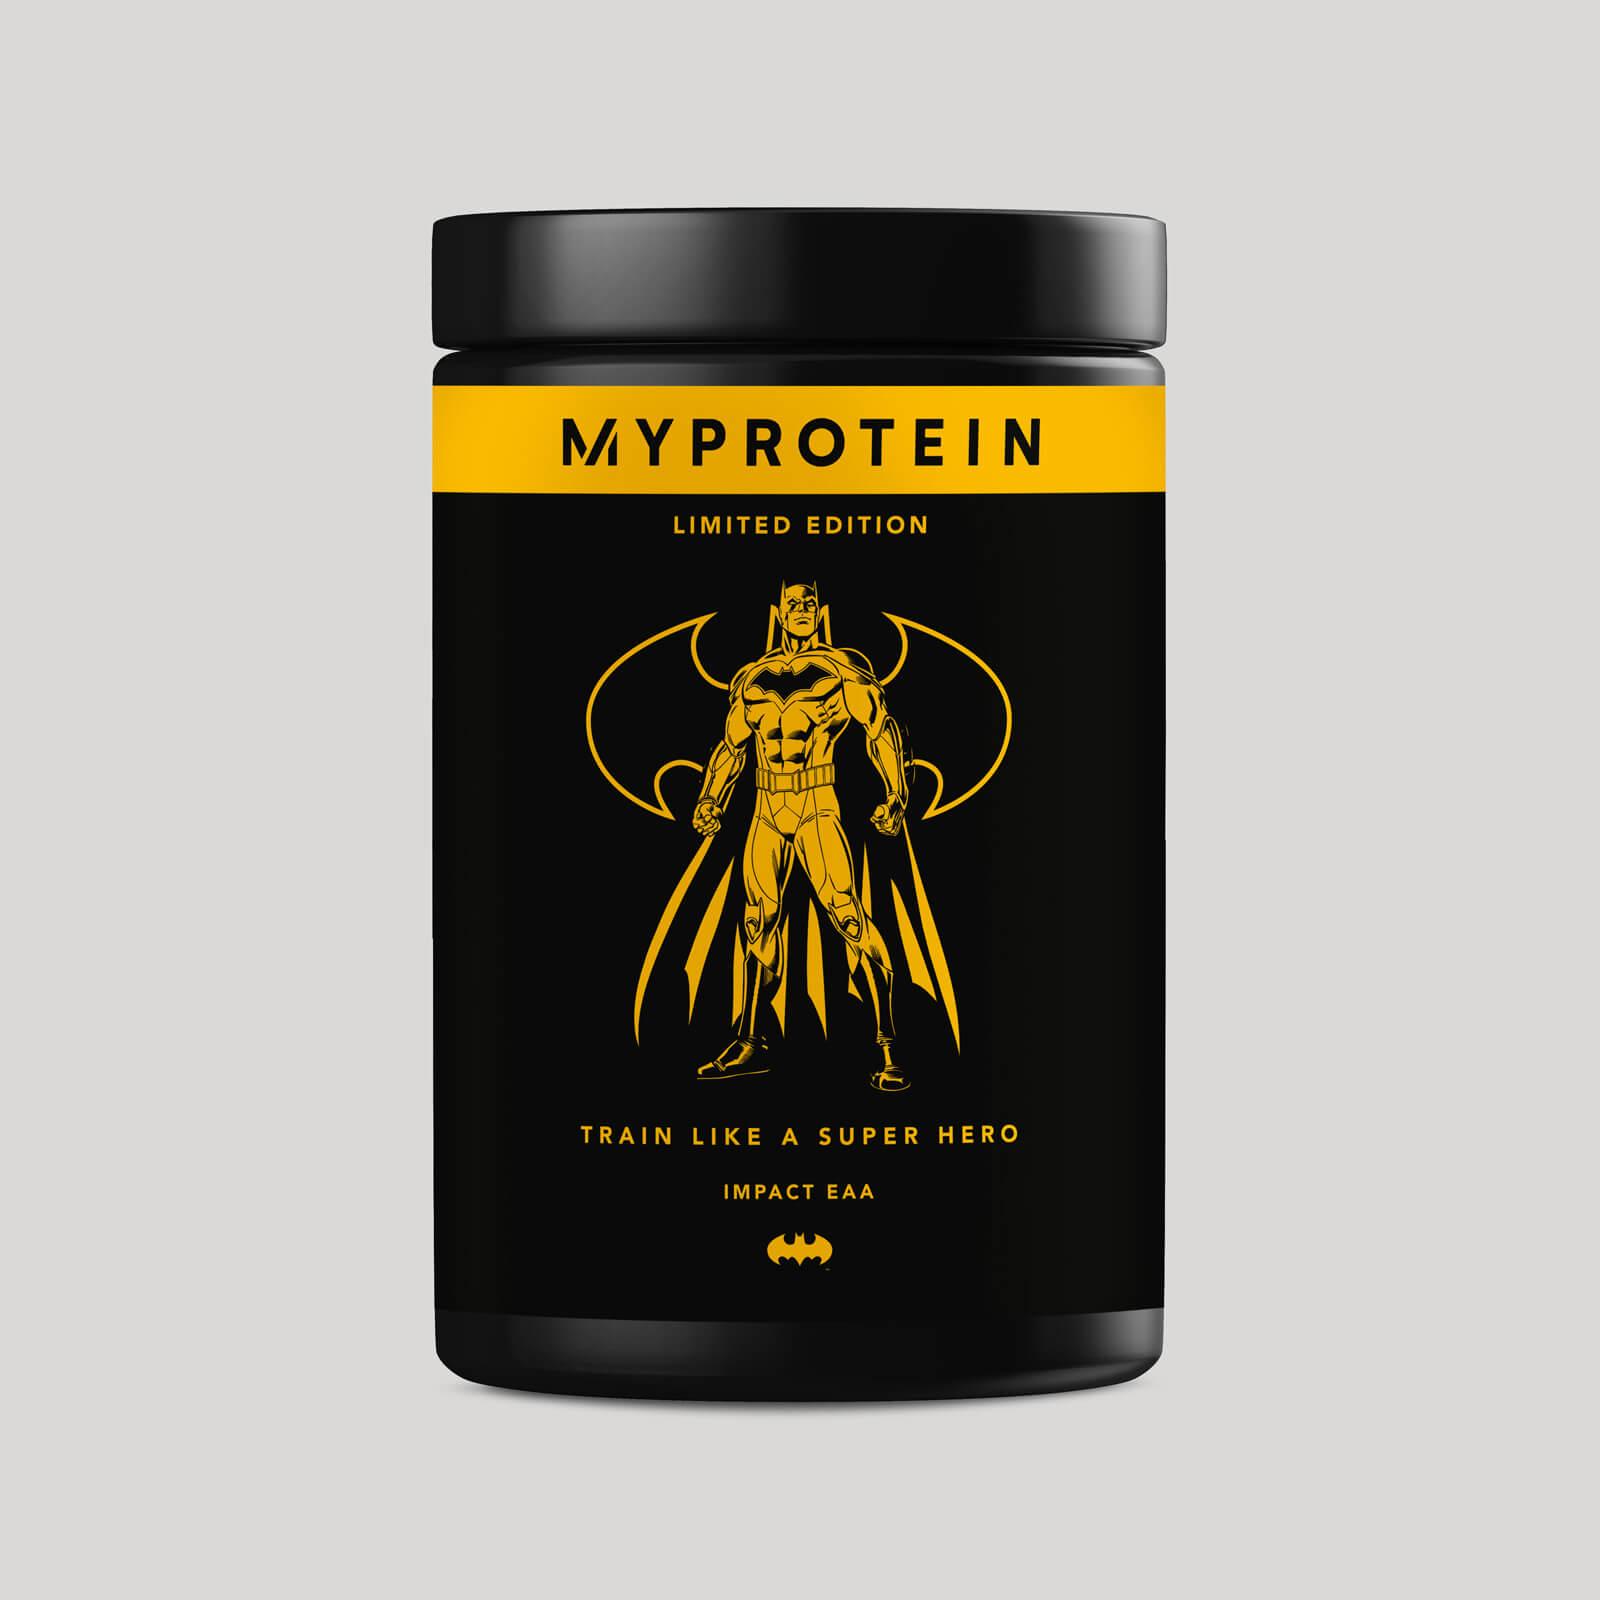 Myprotein Impact EAA x Batman (ALT)